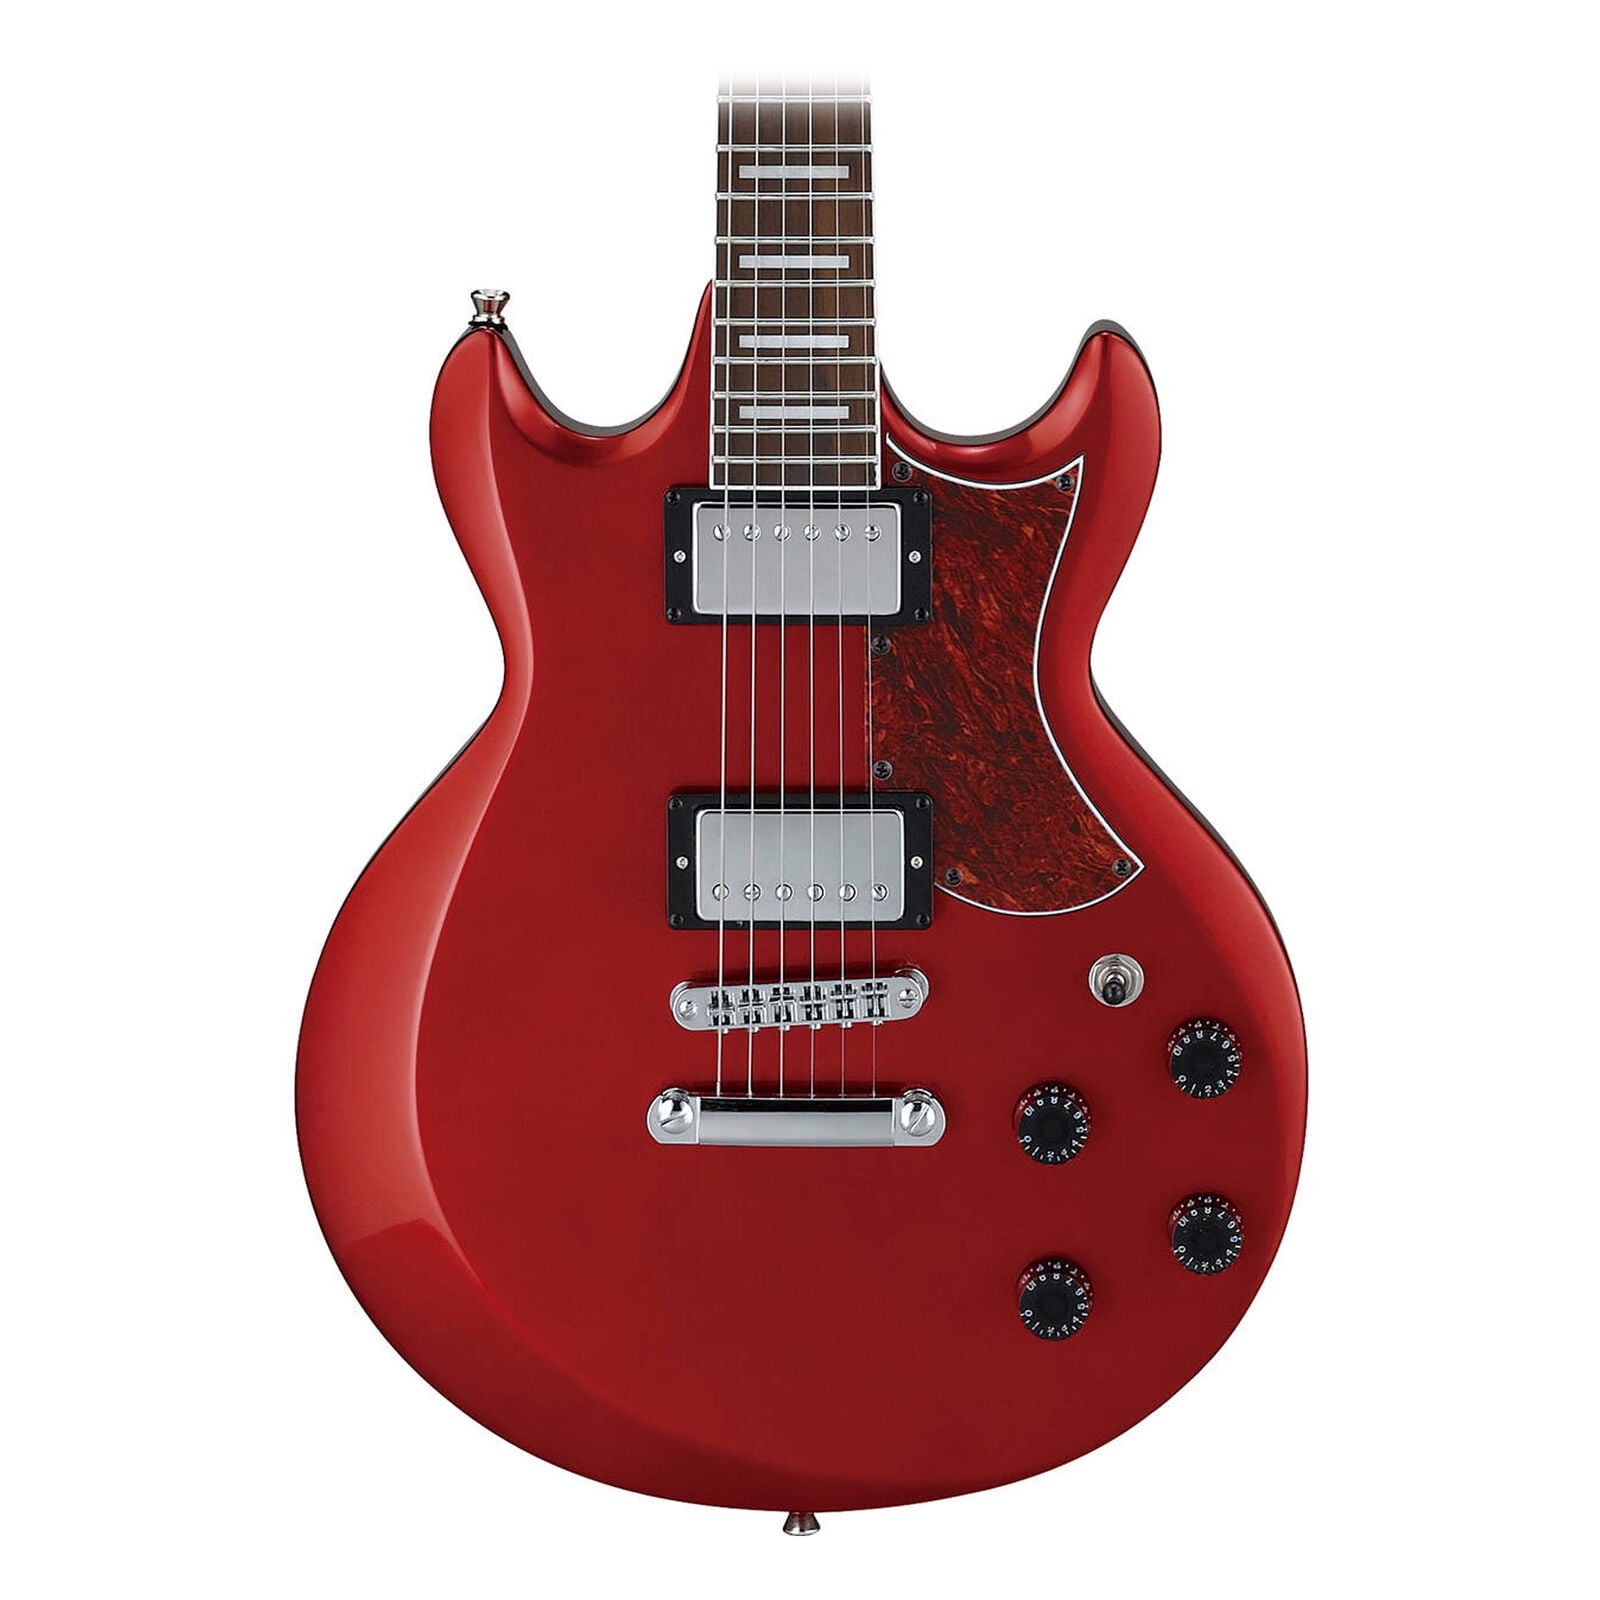 Ibanez AX120 AX Series Electric Guitar (Candy Apple) - Walmart.com